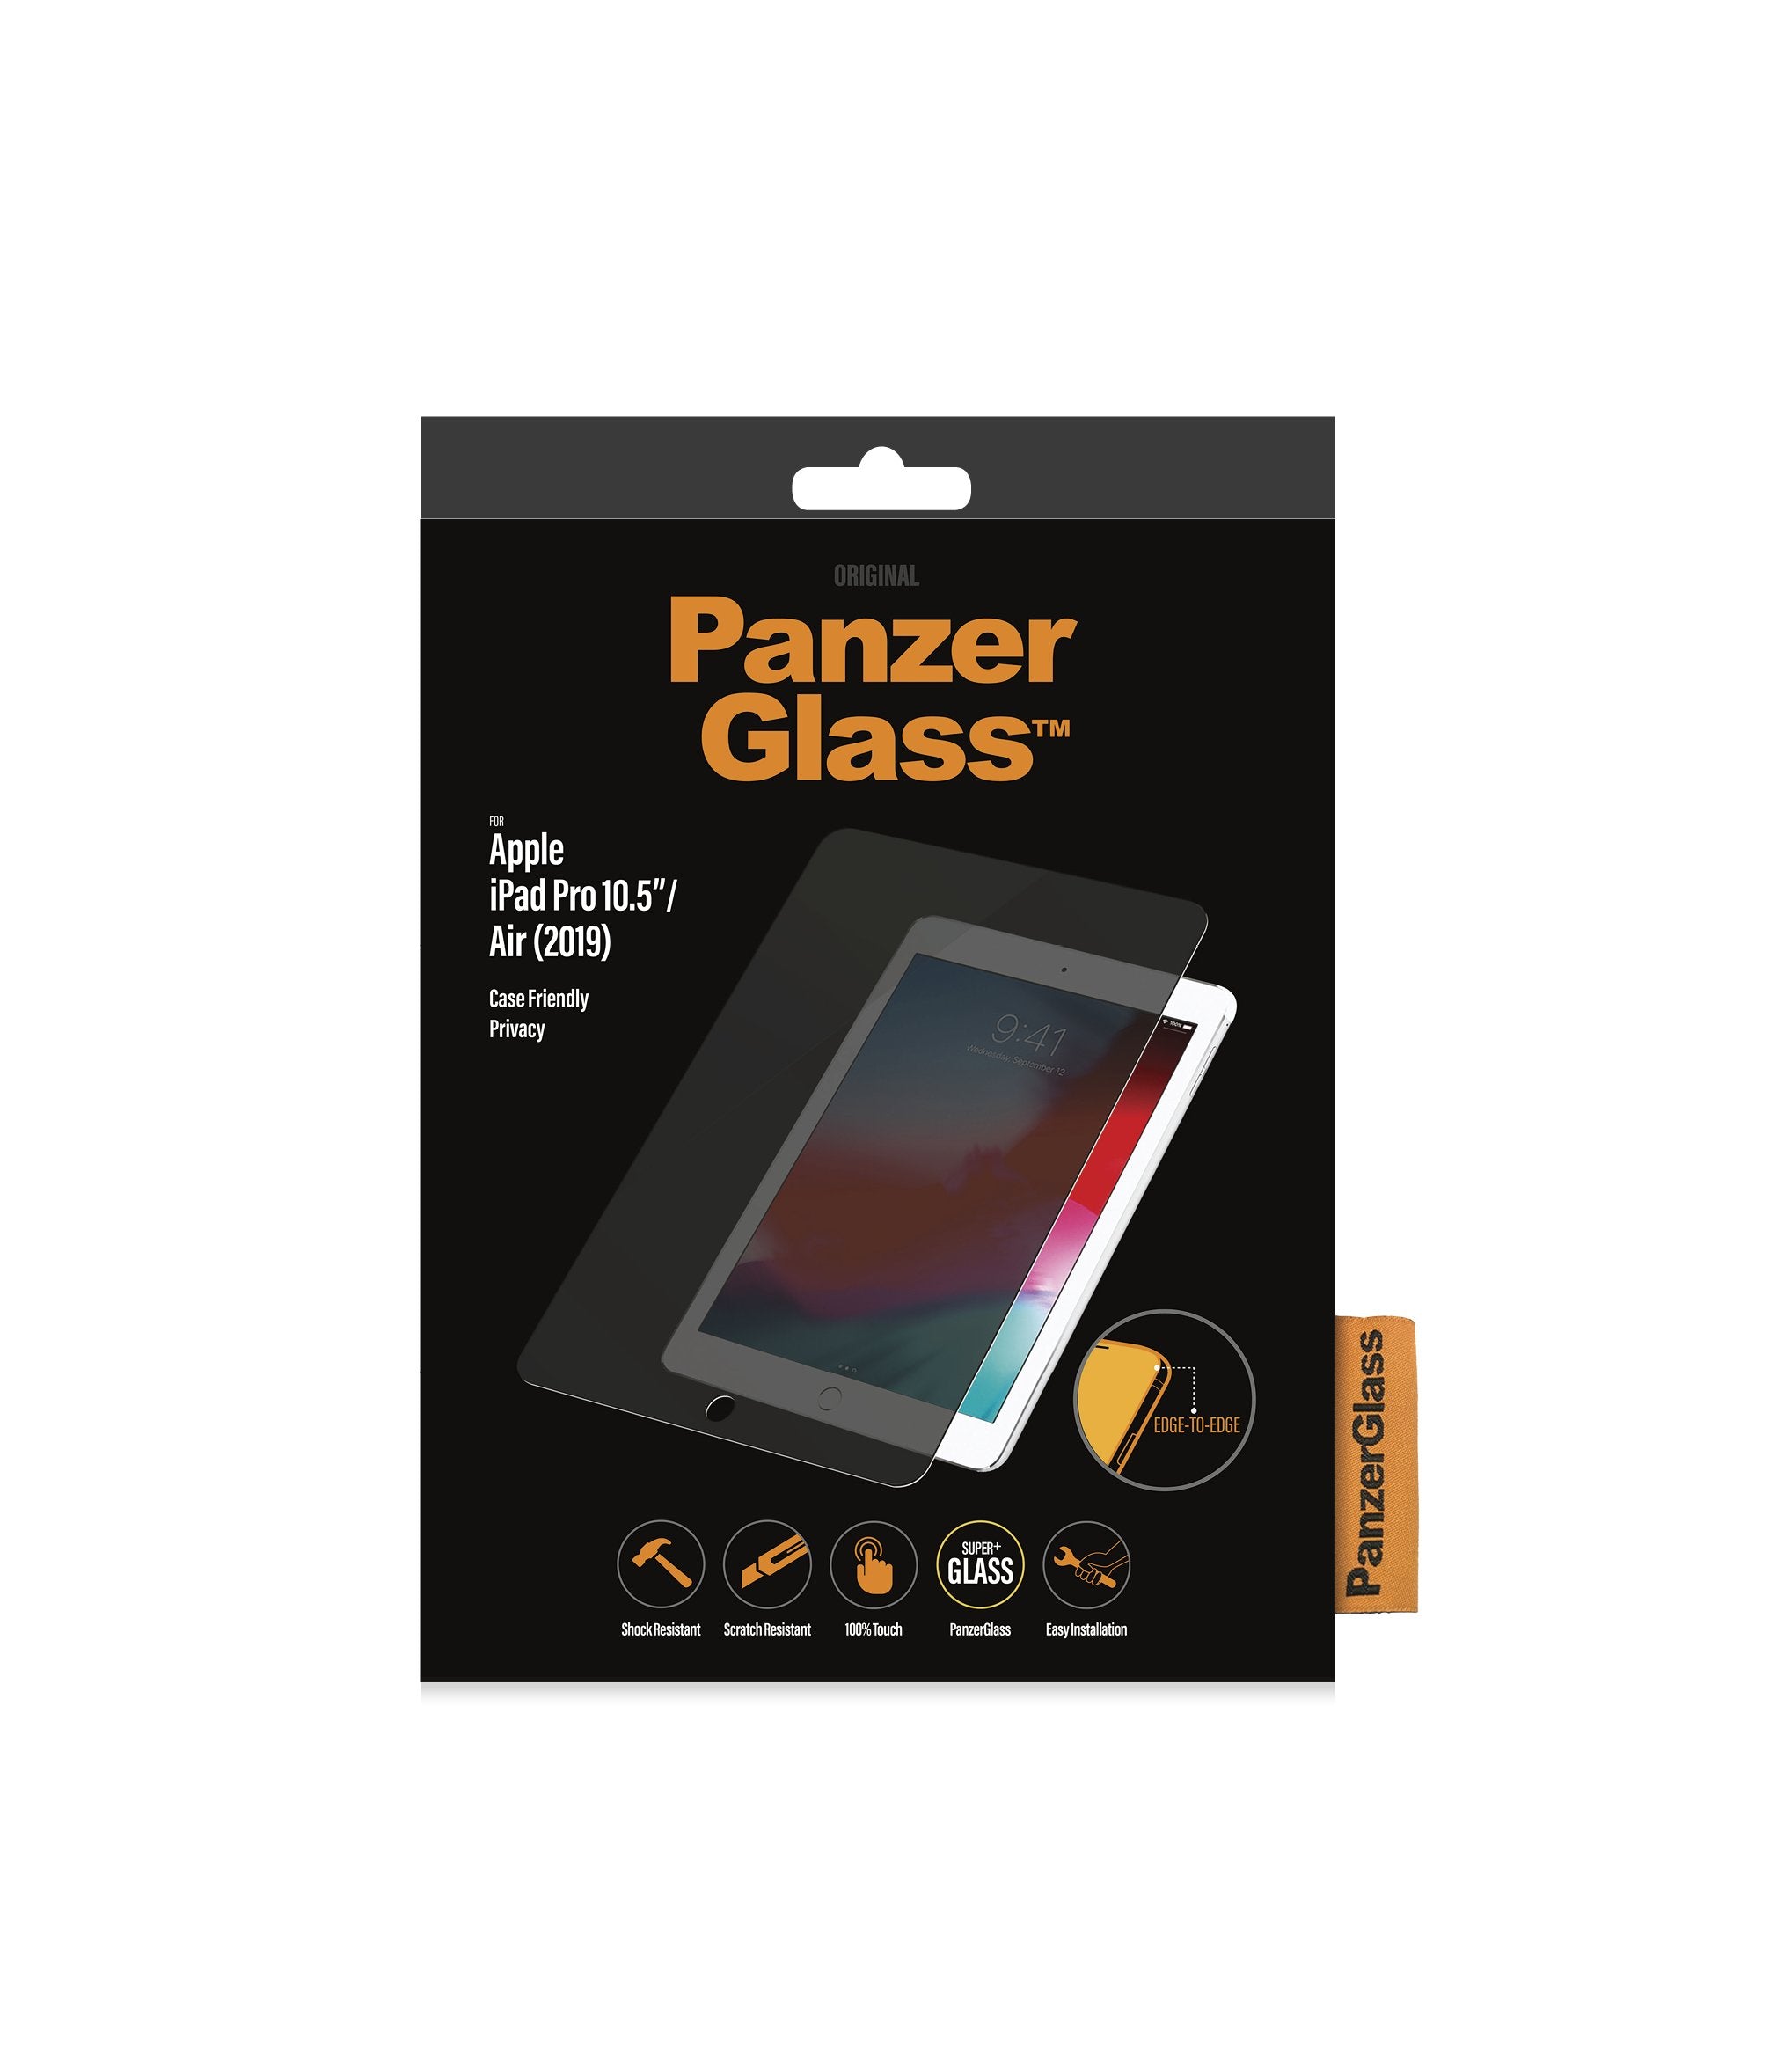 Panzerglass Tempered Glass iPad Pro 10.5/Air 2019